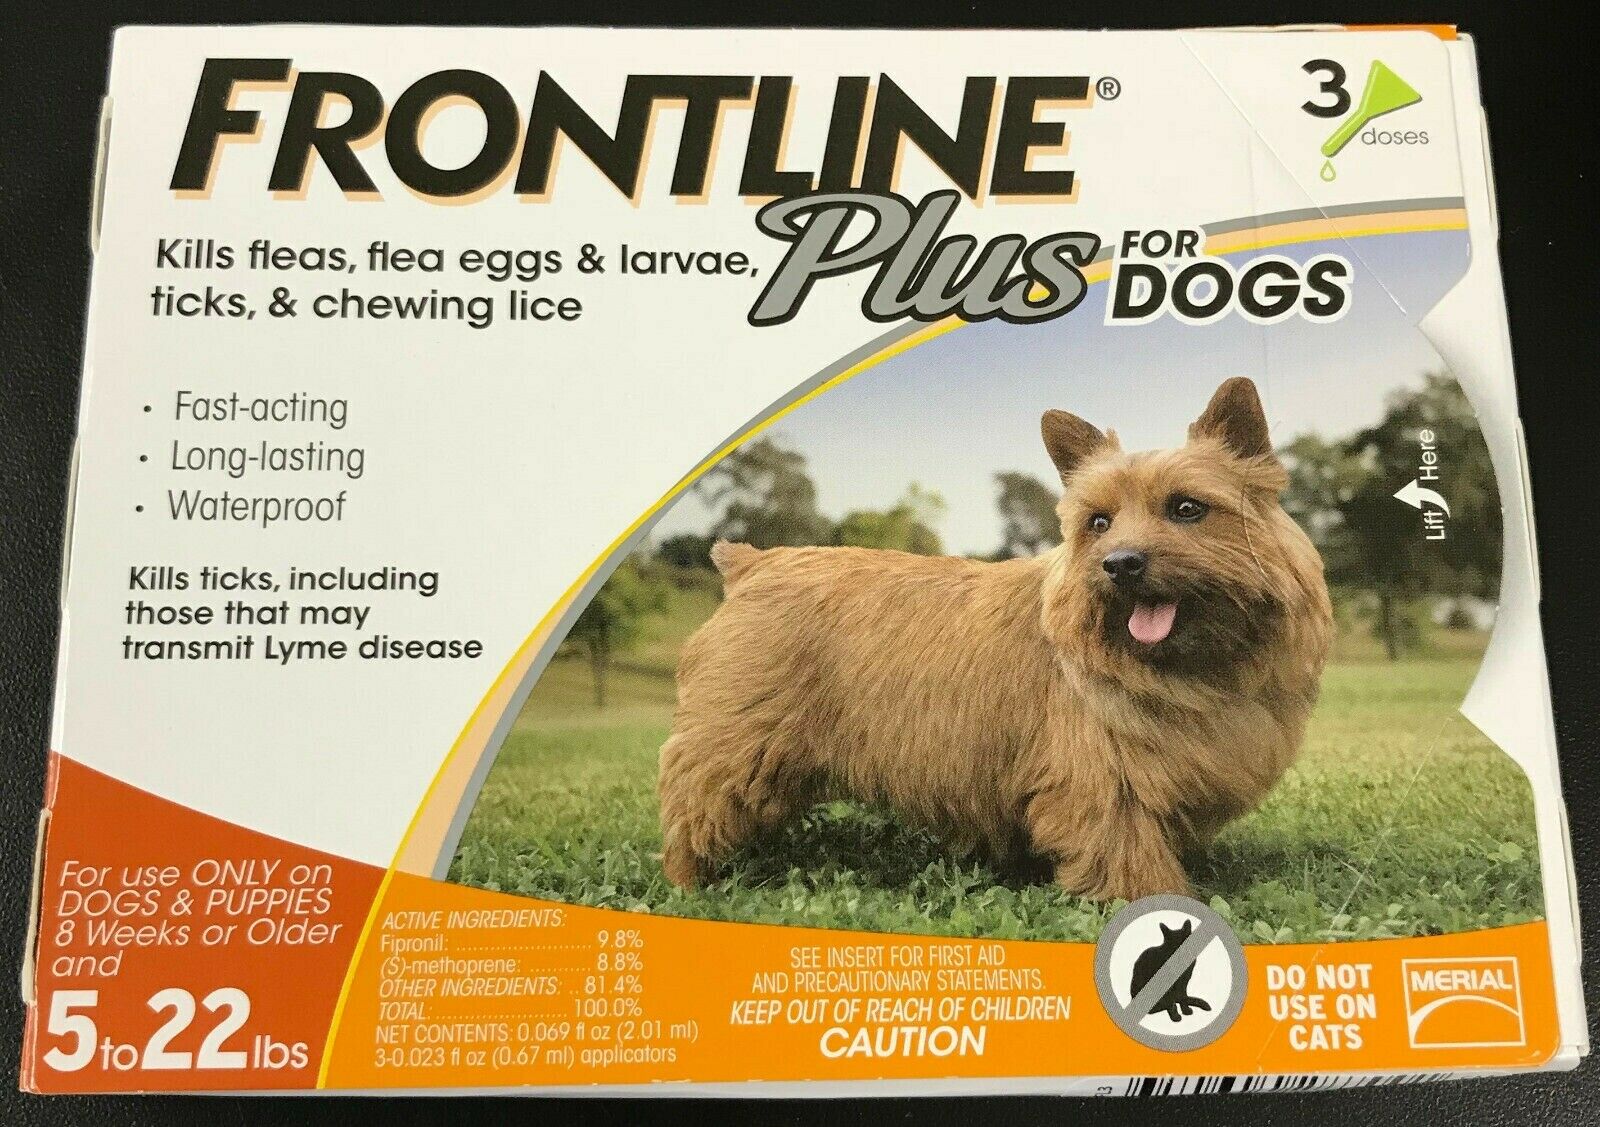 Frontline Plus Flea & Tick Control For Dogs 5-22lbs Orange 3 Doses Pack #7001